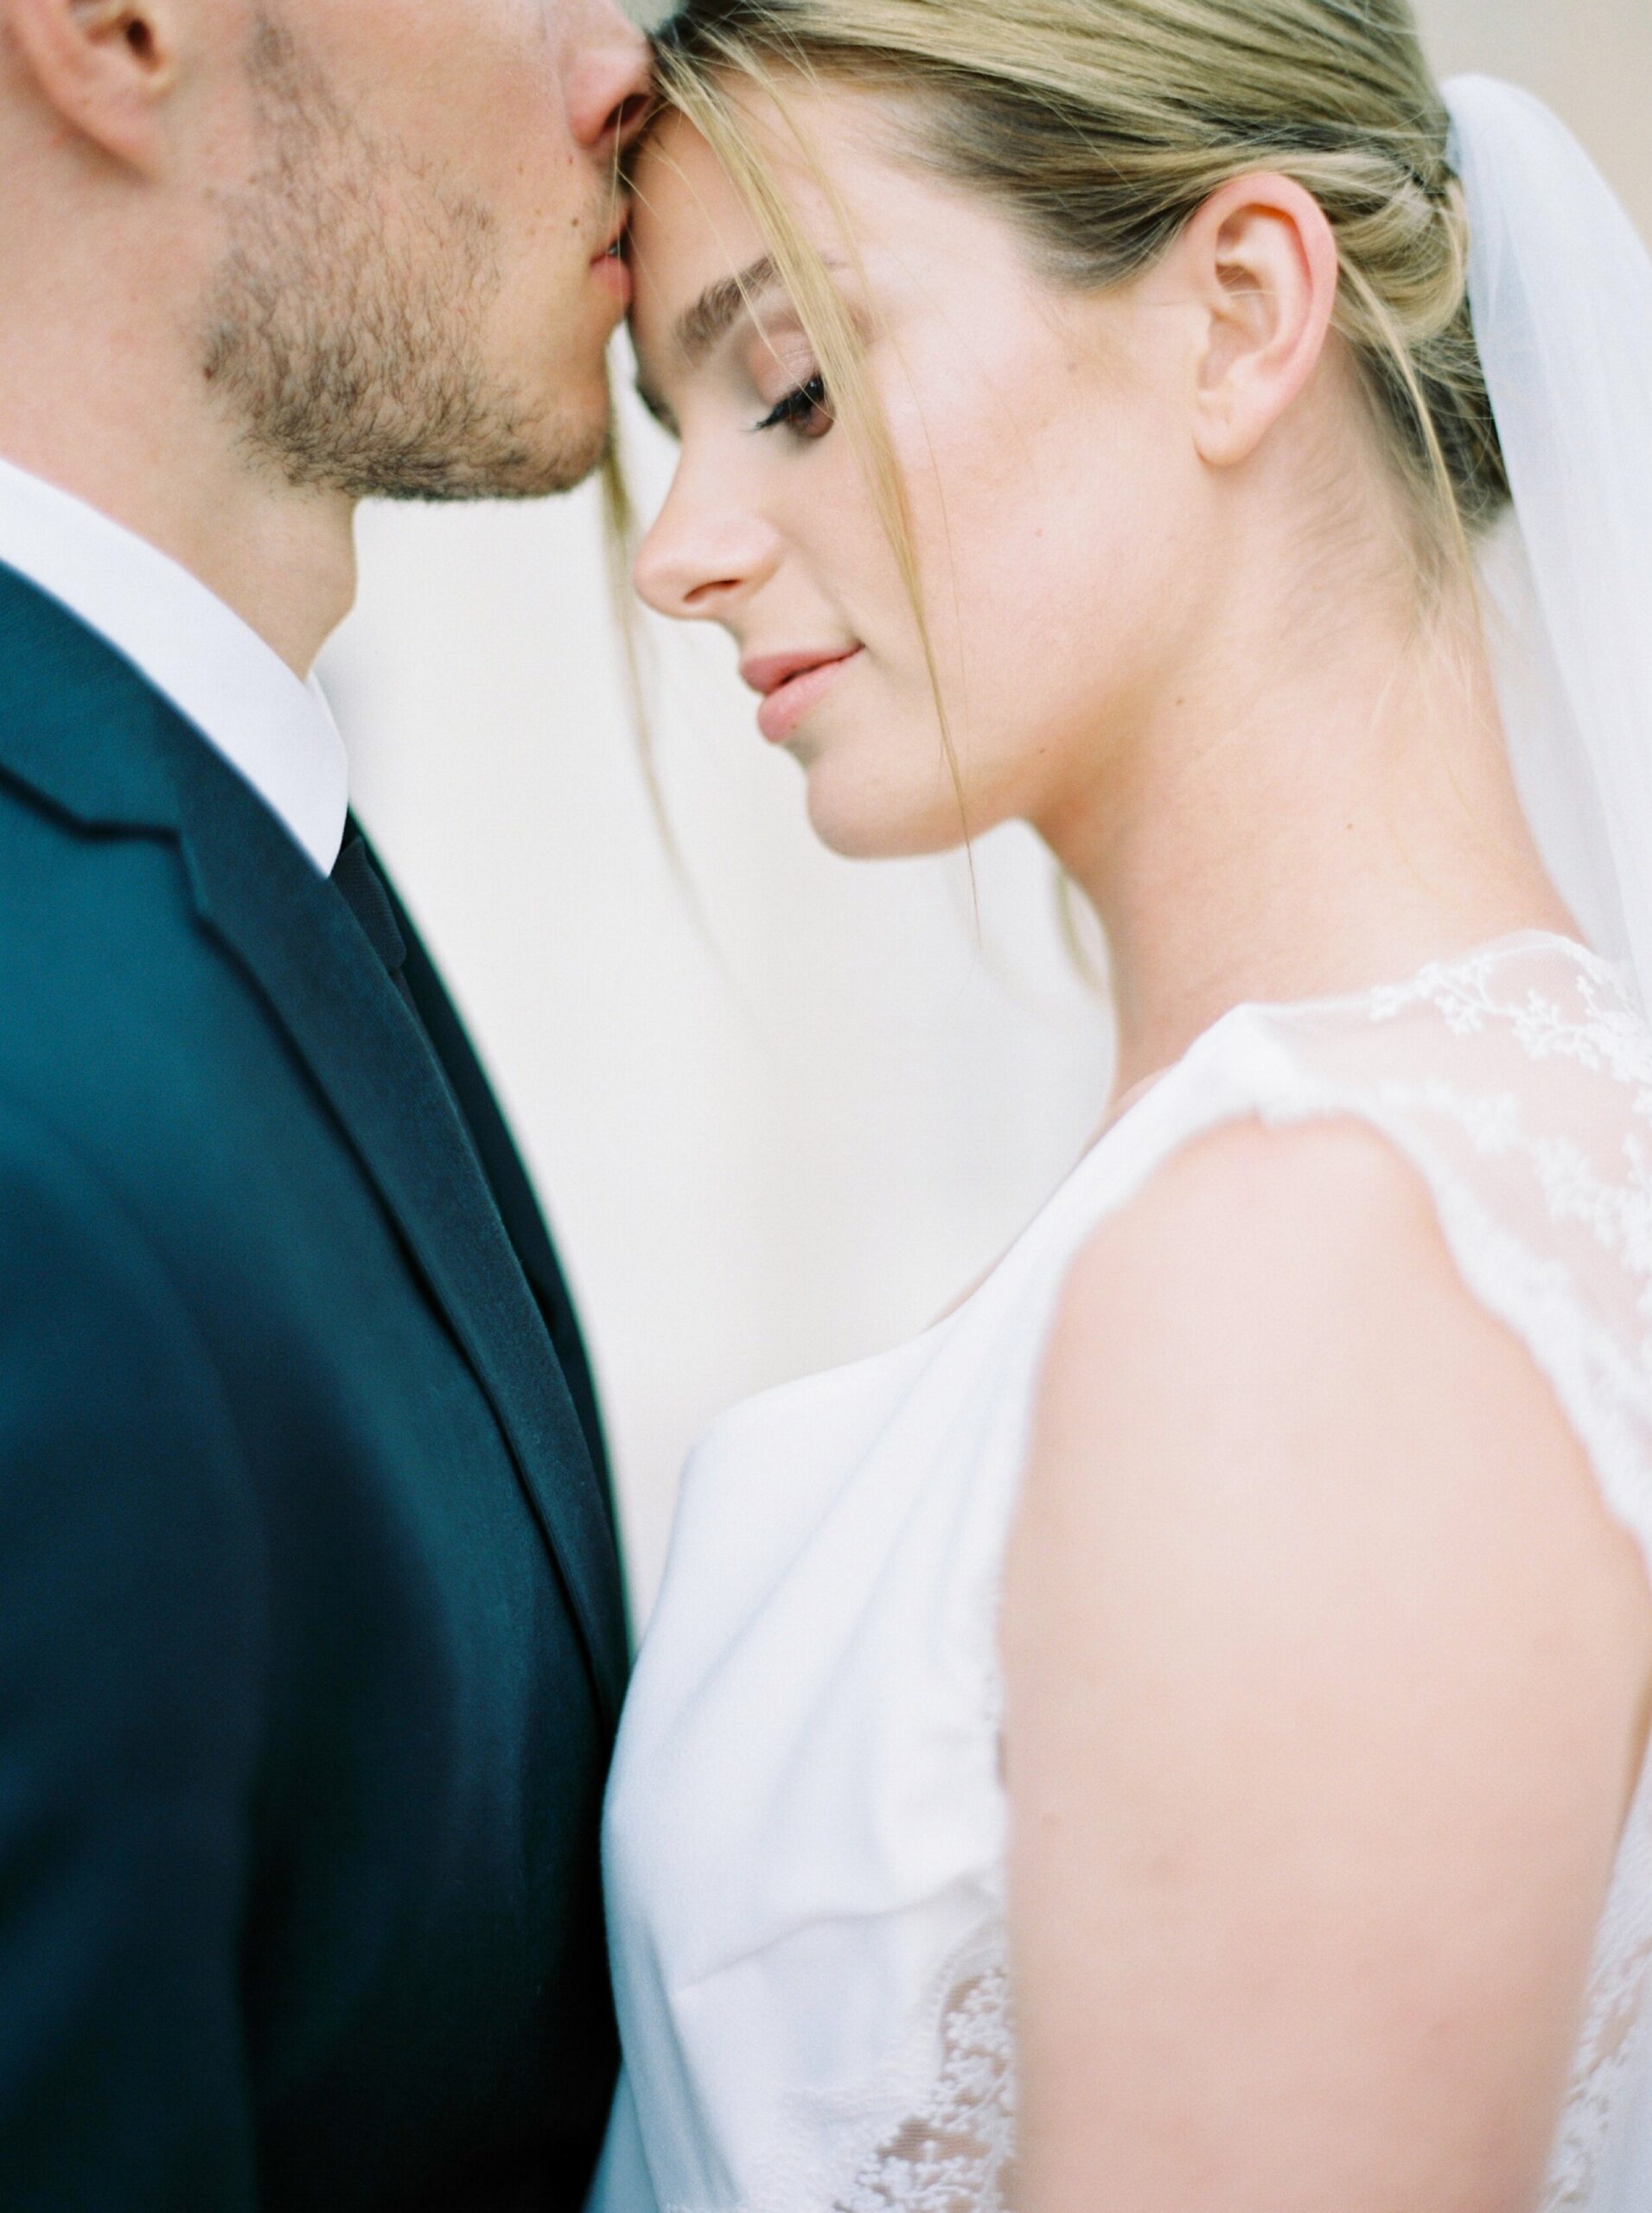  bride and groom portrait ideas | Chateau wedding | Paris wedding photographer | fine art film photographer 